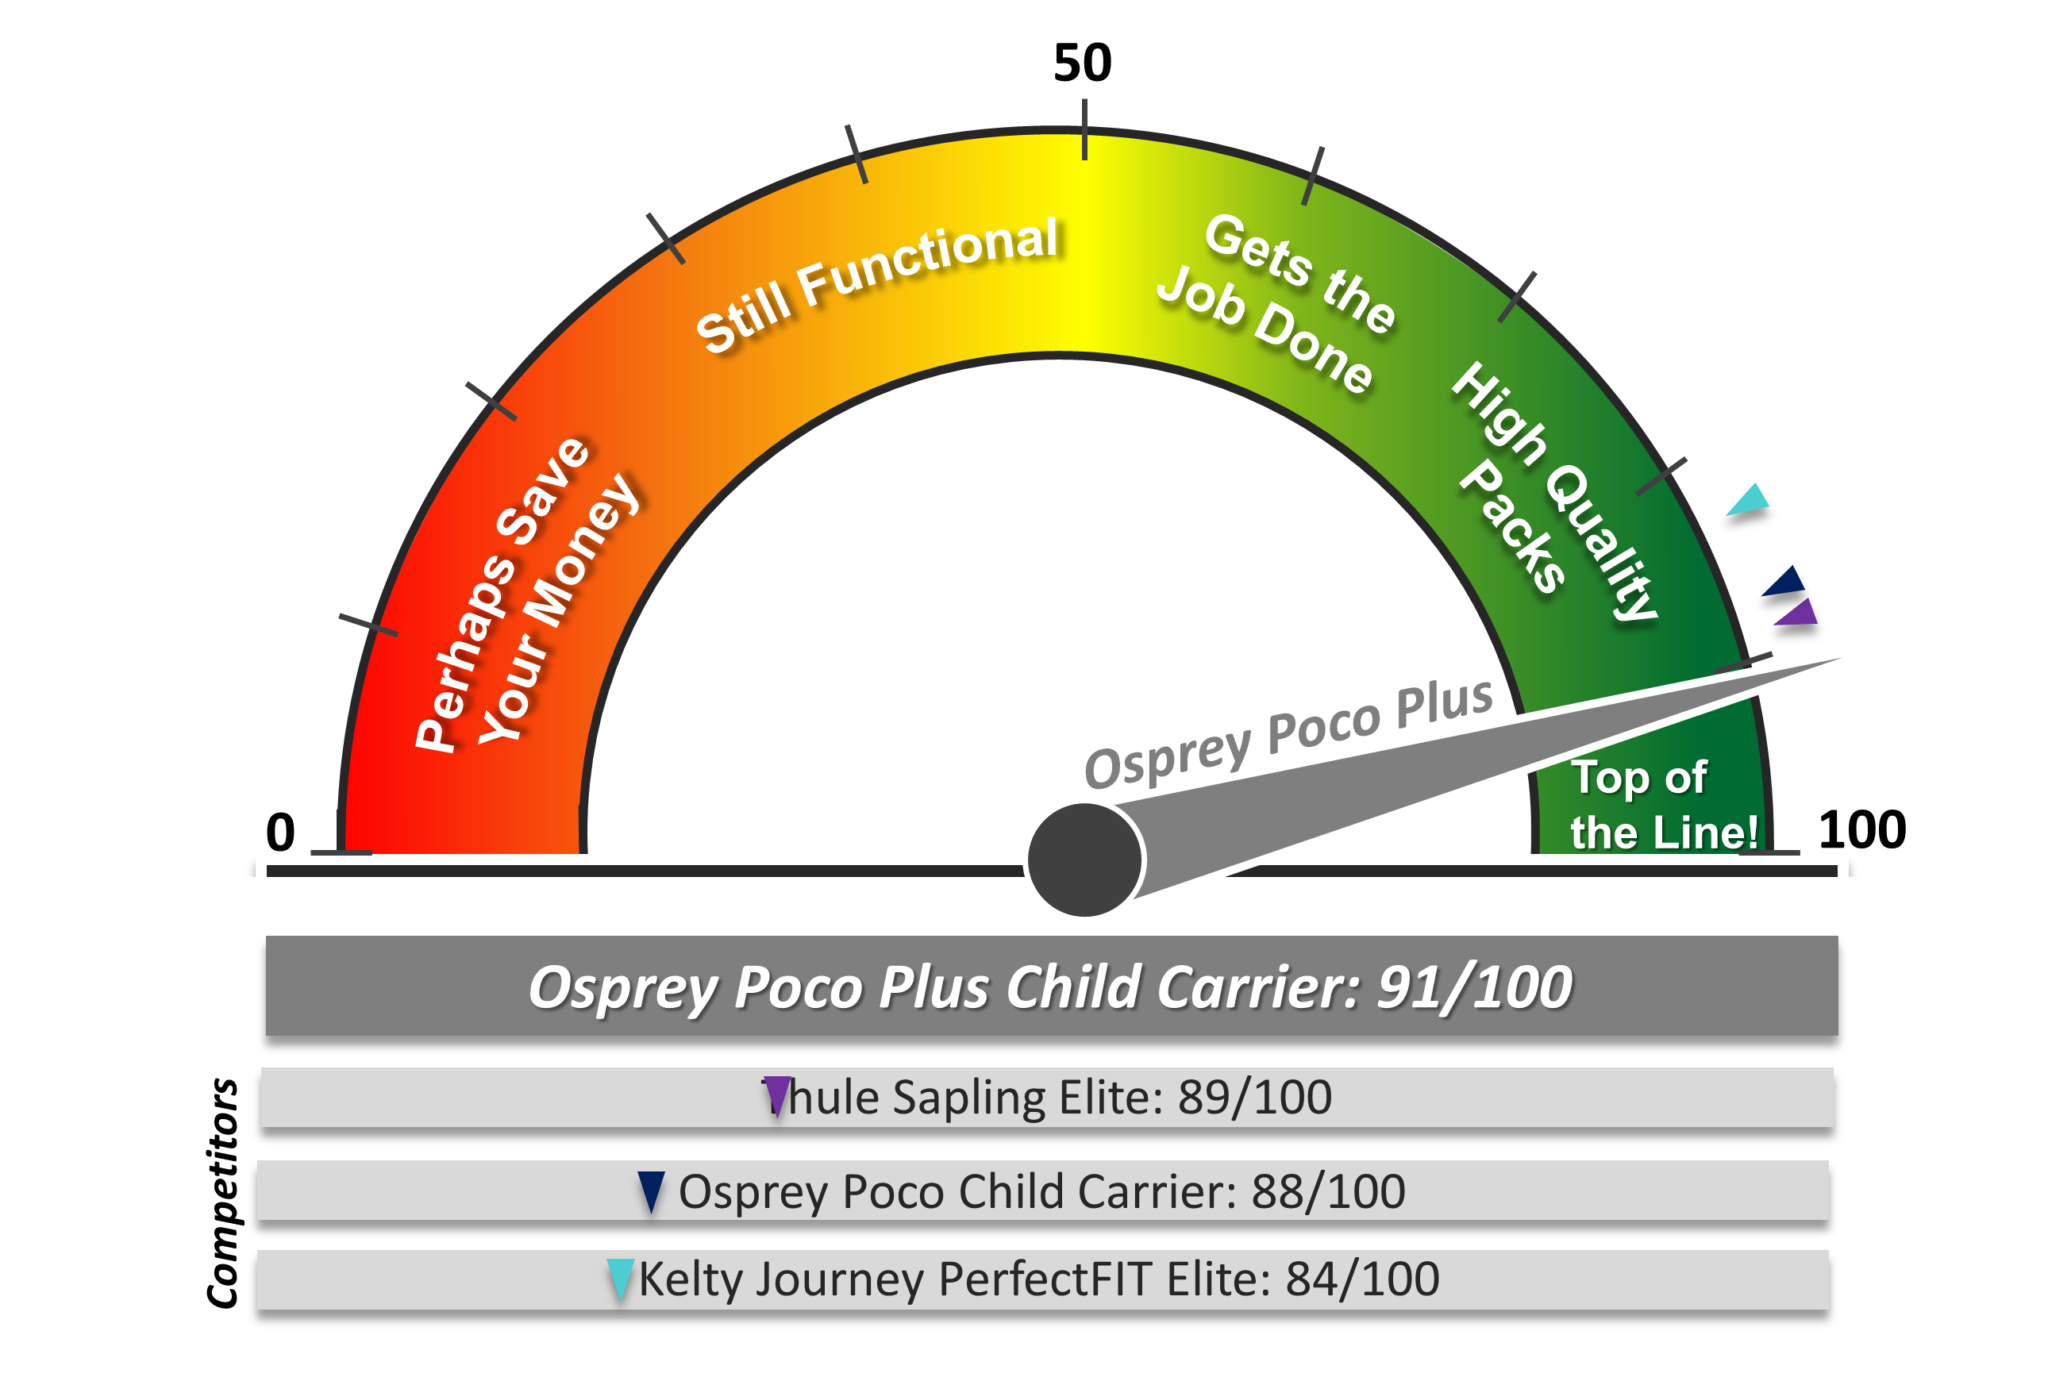 Osprey Poco Plus compared to key competitors